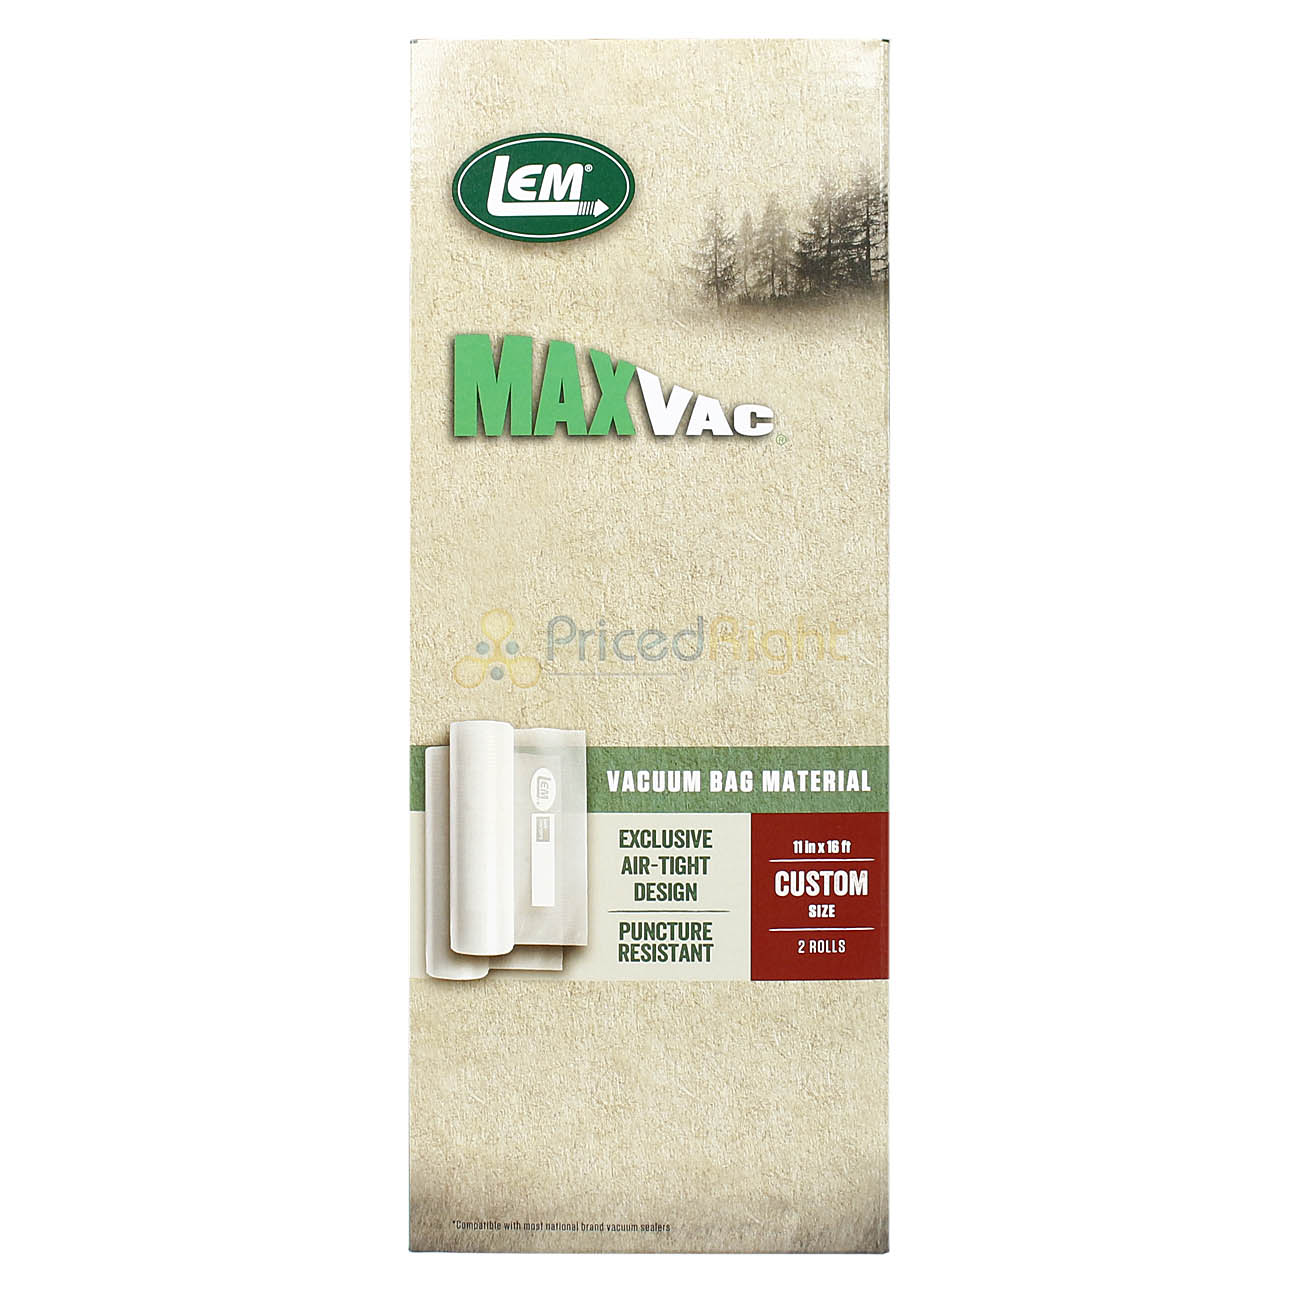 Lem MaxVac Vacuum Bag Roll 11 in X 16 ft - 2 Count 1390